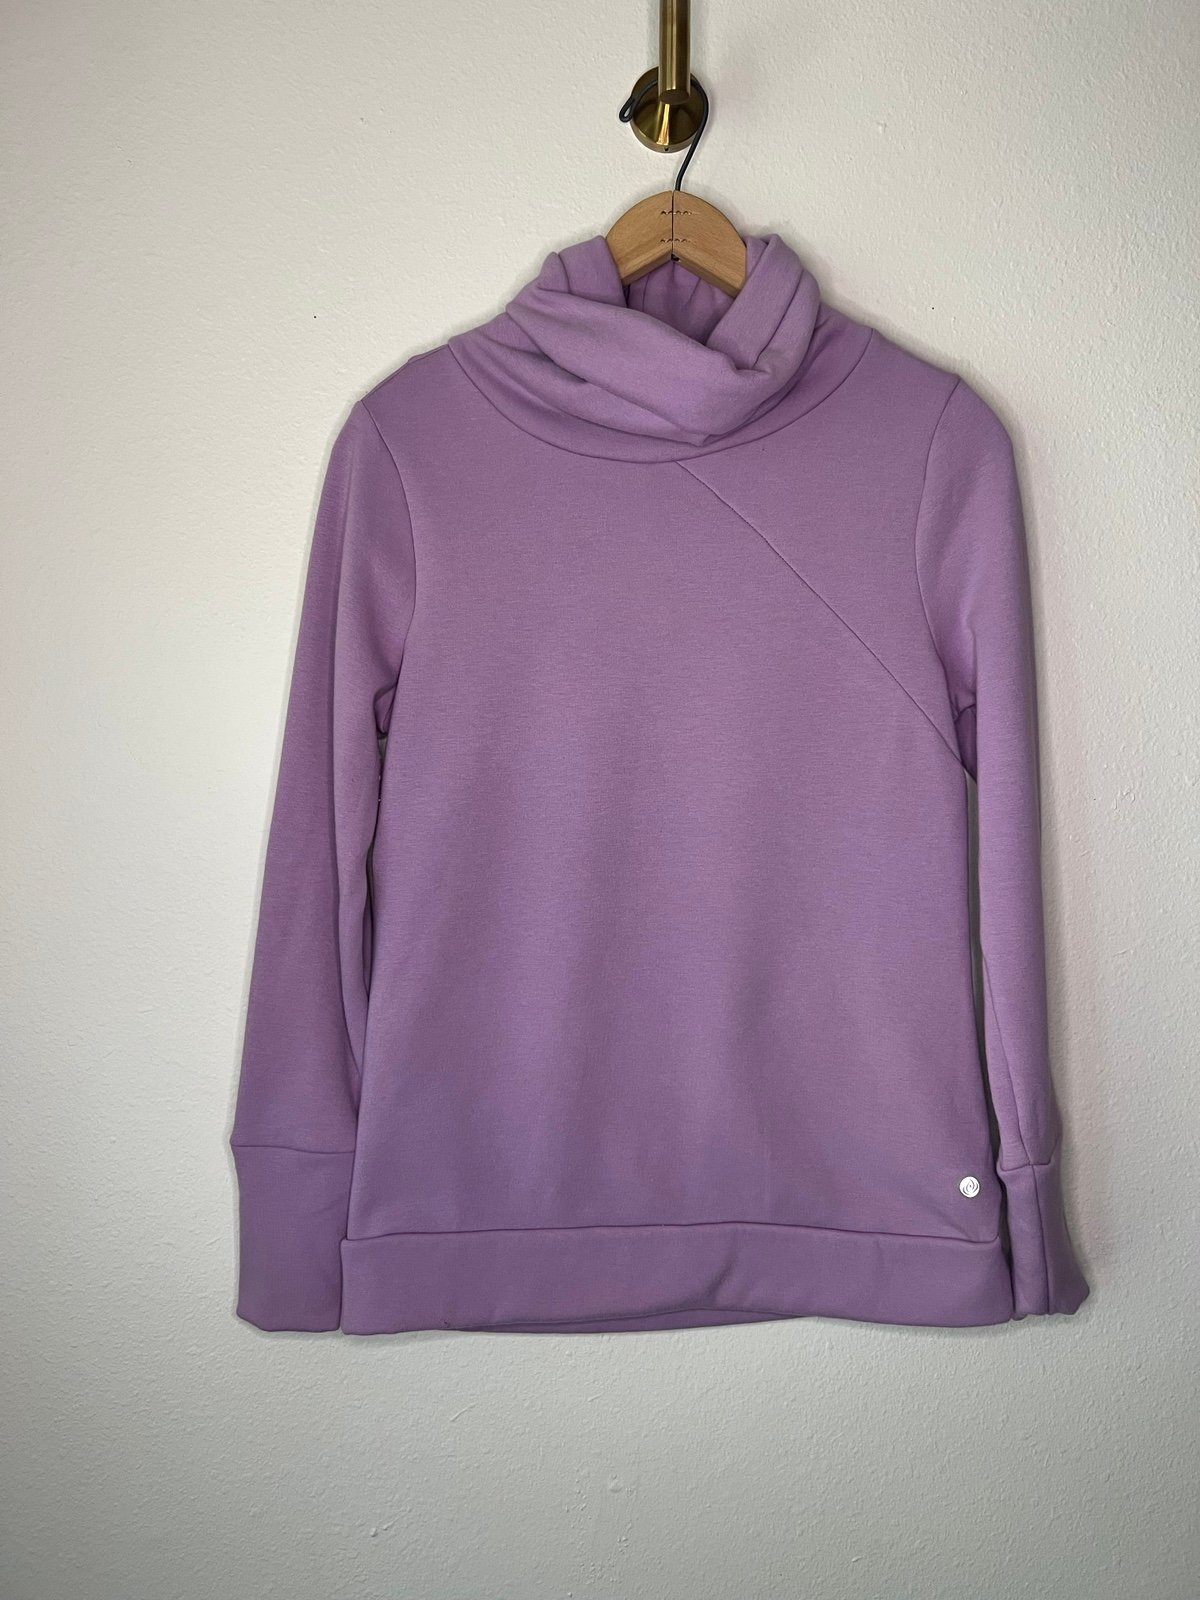 Authentic Apana Light Purple Sweatshirt size S M1Zm02od